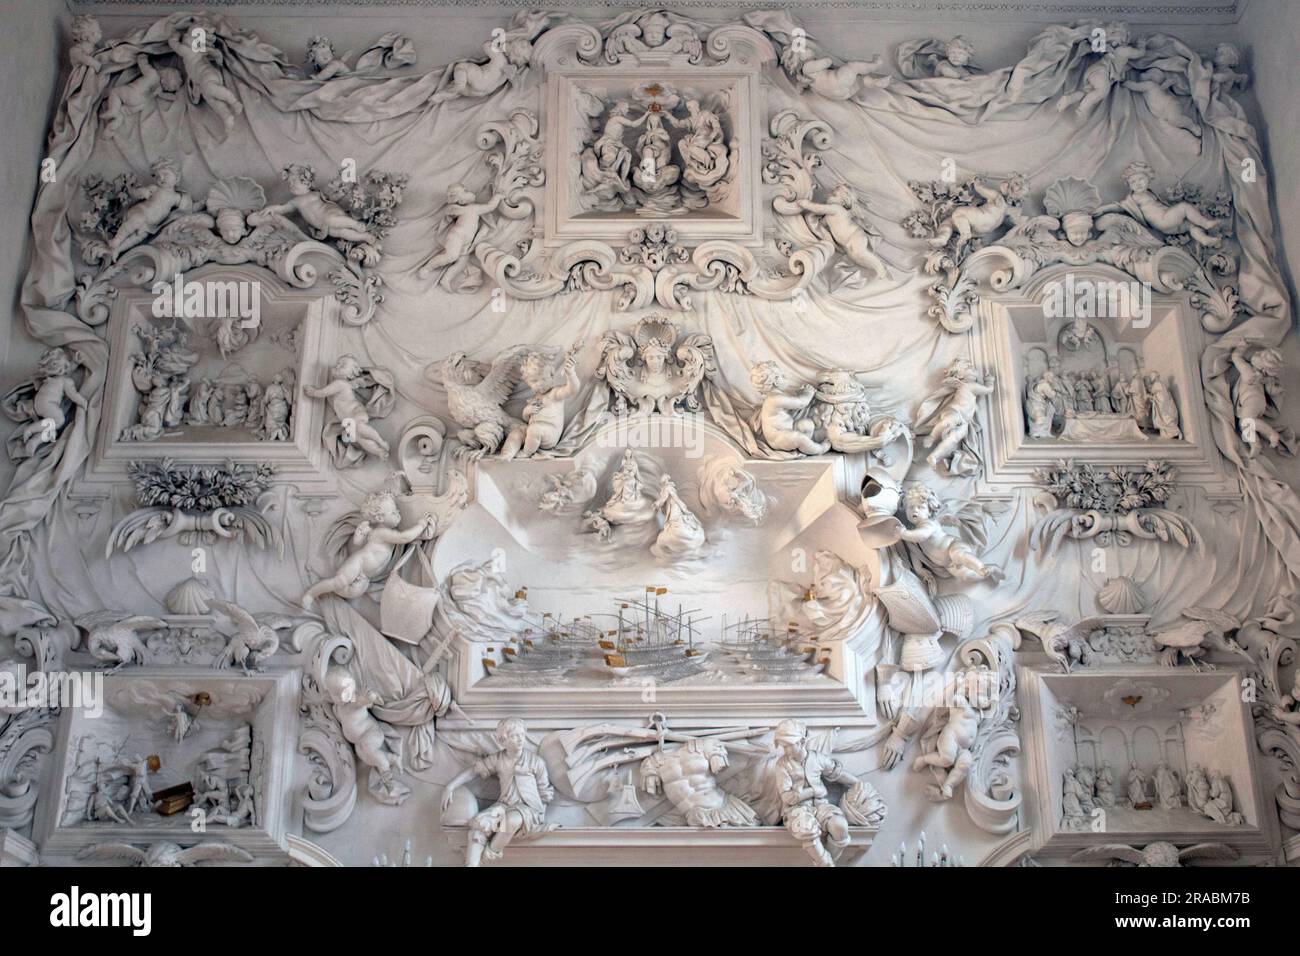 L'intérieur baroque en stuc de l'Oratorio del Rosario di Santa Cita - Oratoire du Rosaire de Santa Cita - Palerme, Sicile Banque D'Images